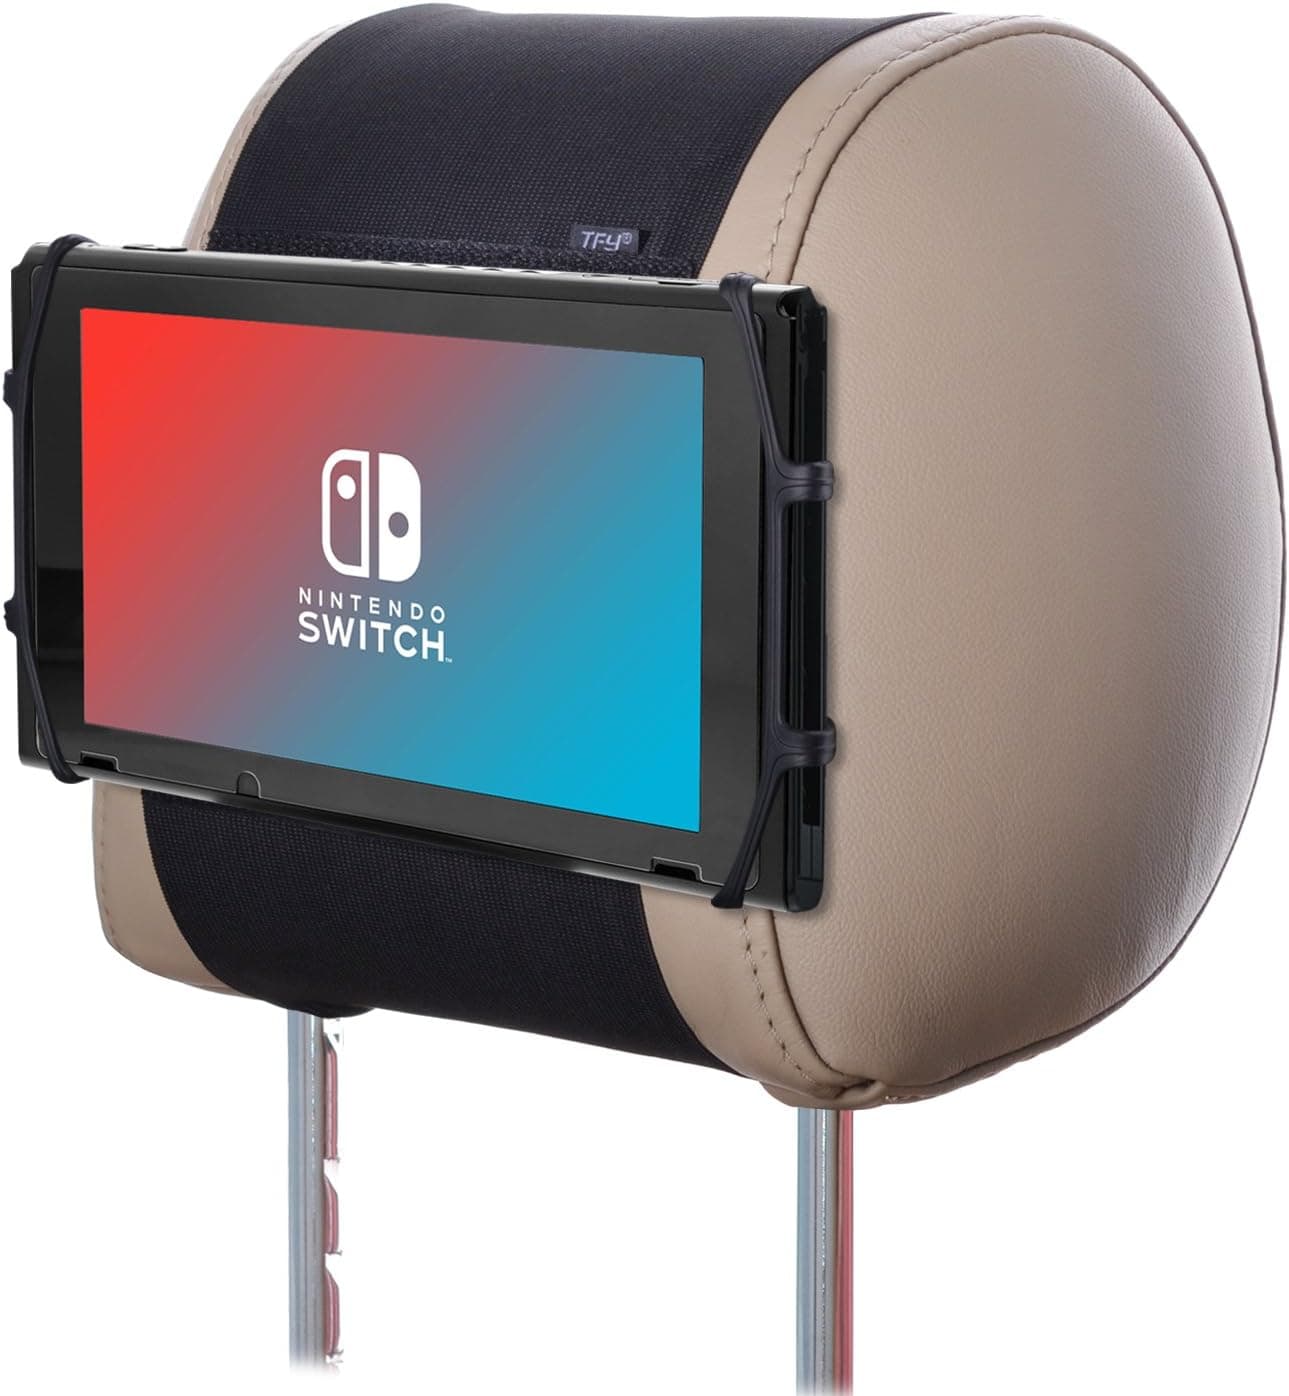 Nintendo Switch Headrest Mount.